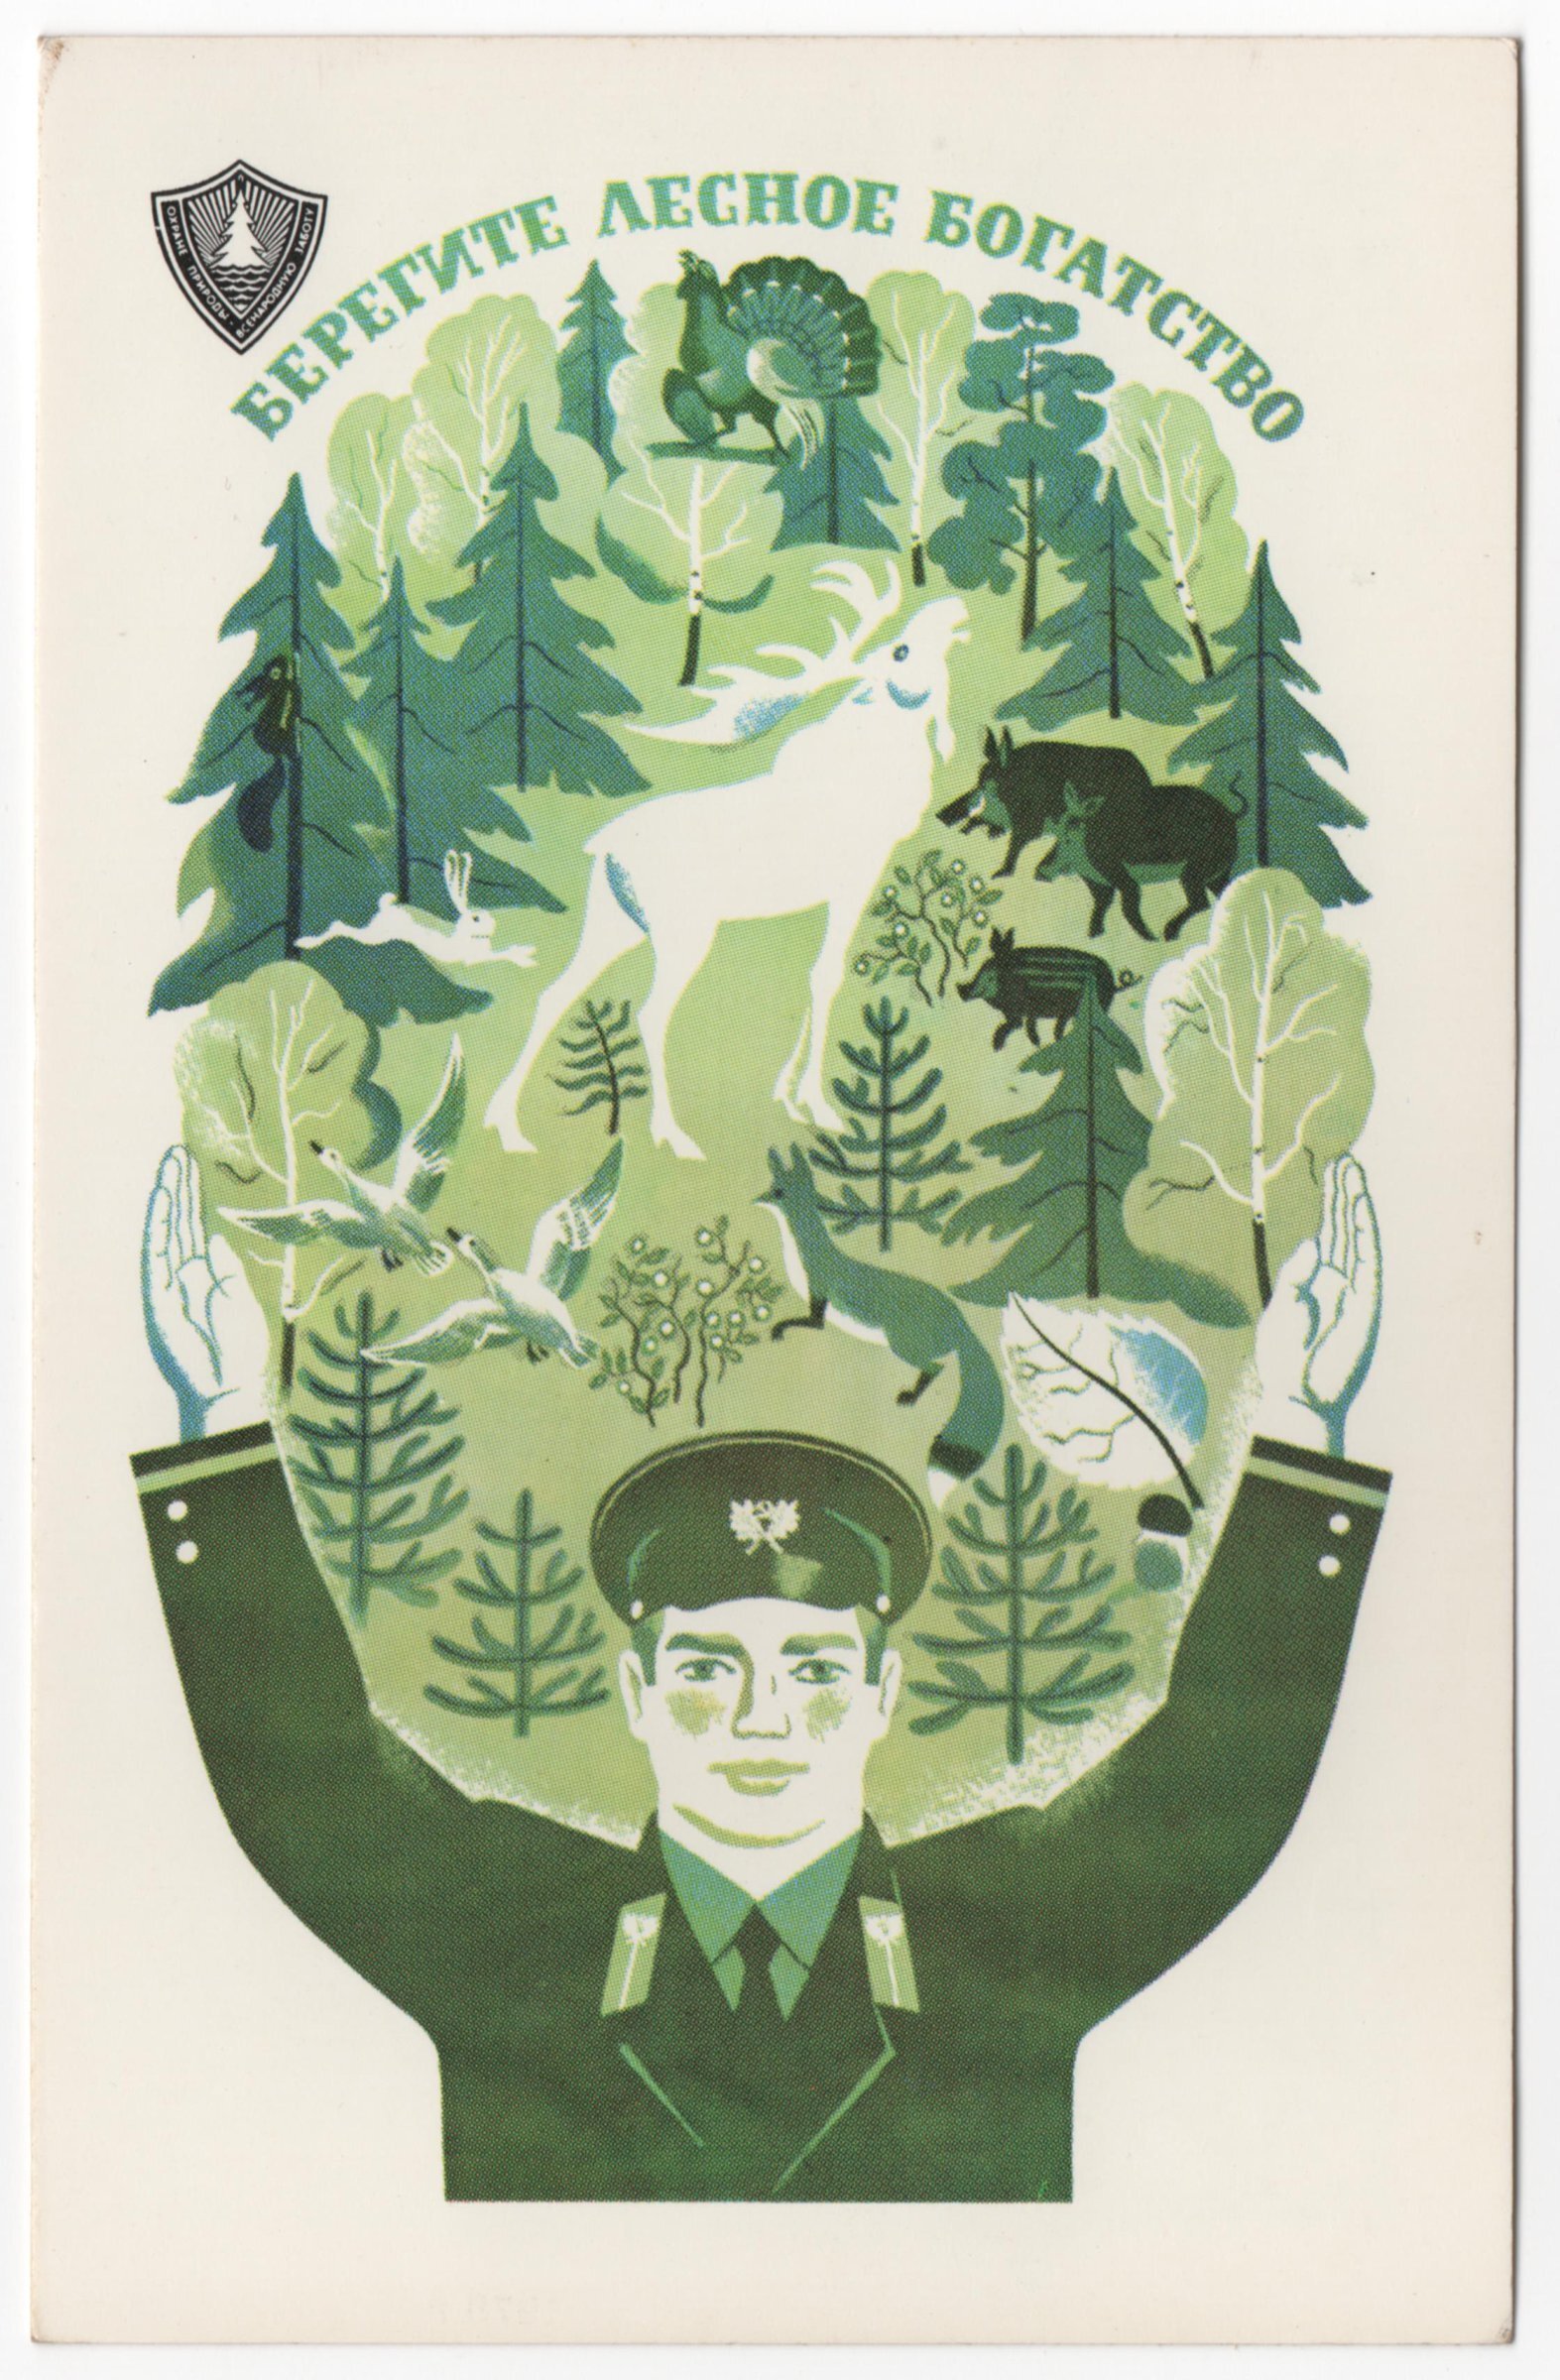 Советские плакаты берегите природу